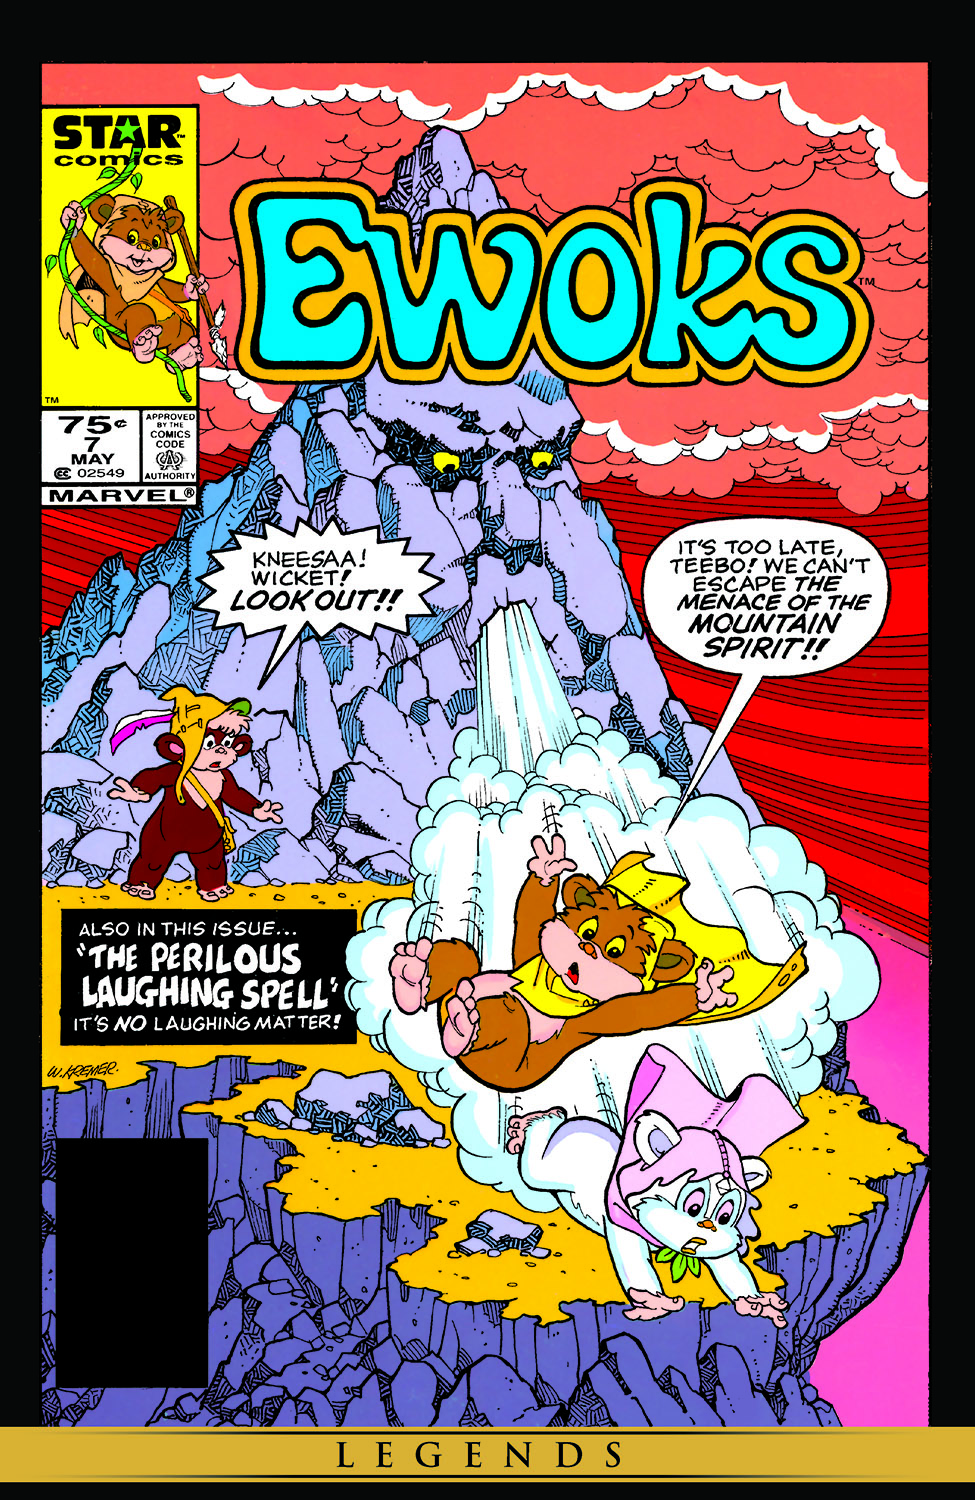 Star Wars: Ewoks (1985) #7